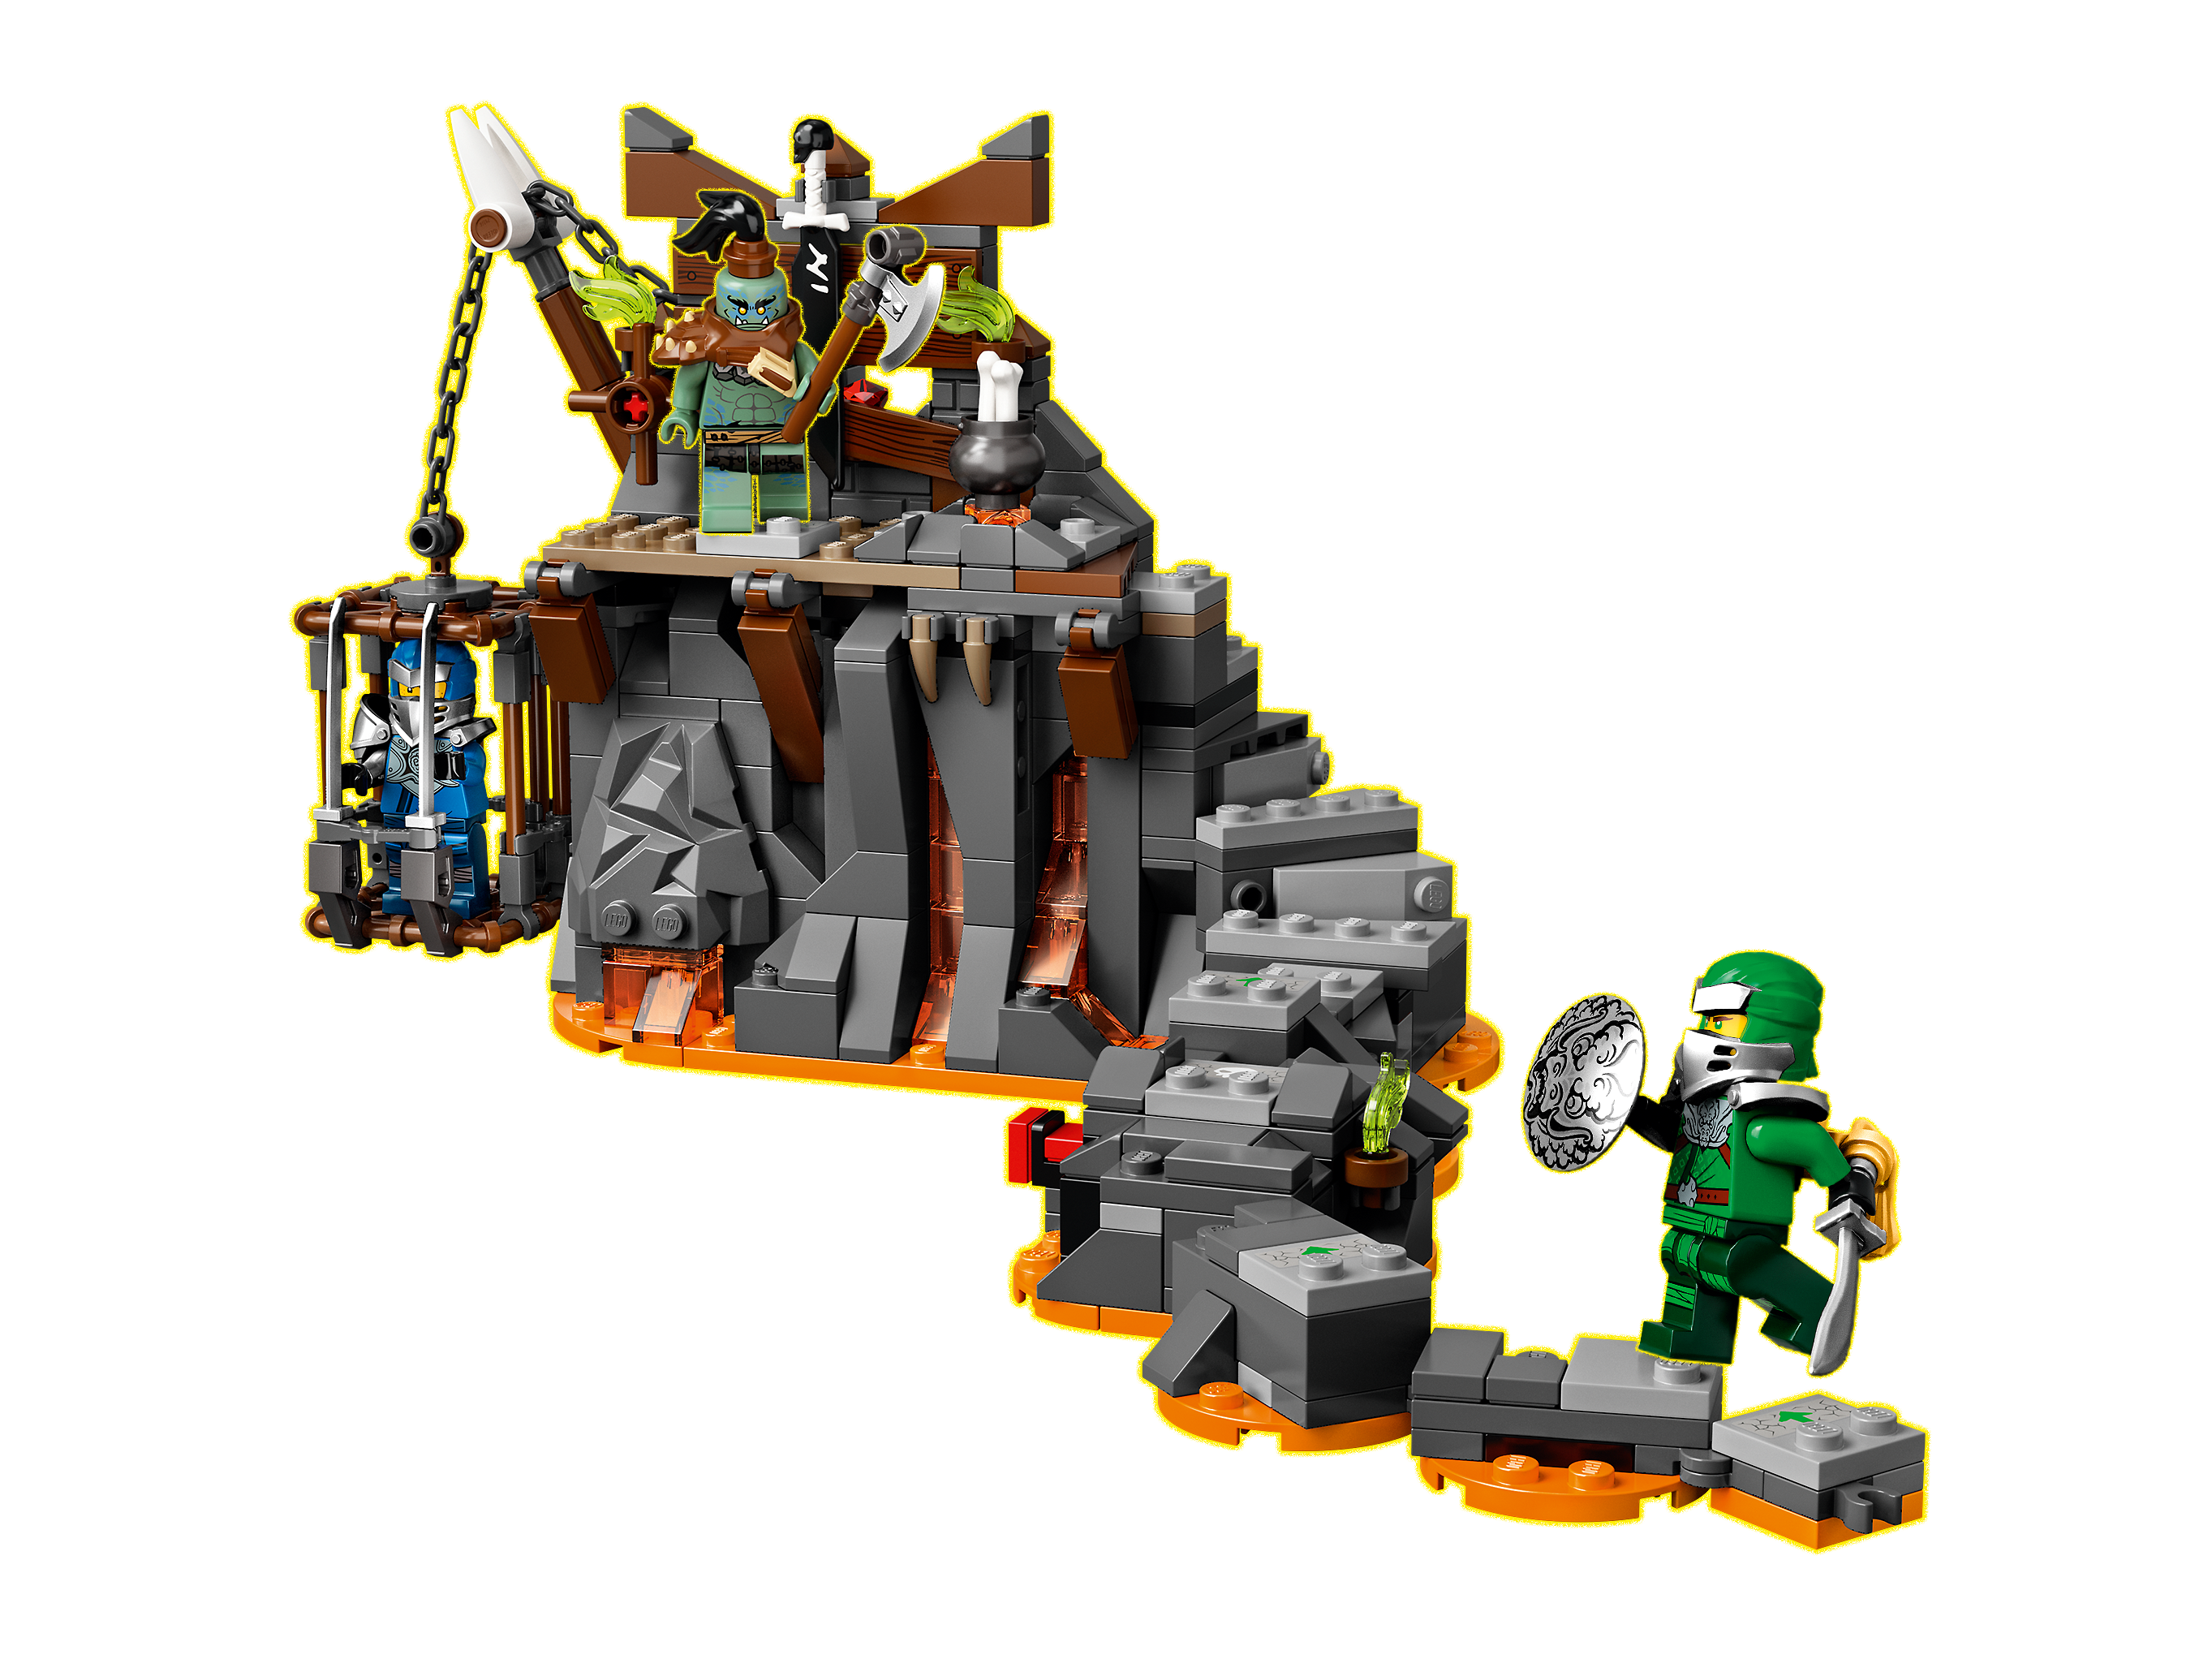 Journey to the Skull Dungeons 71717 for sale online LEGO Ninjago